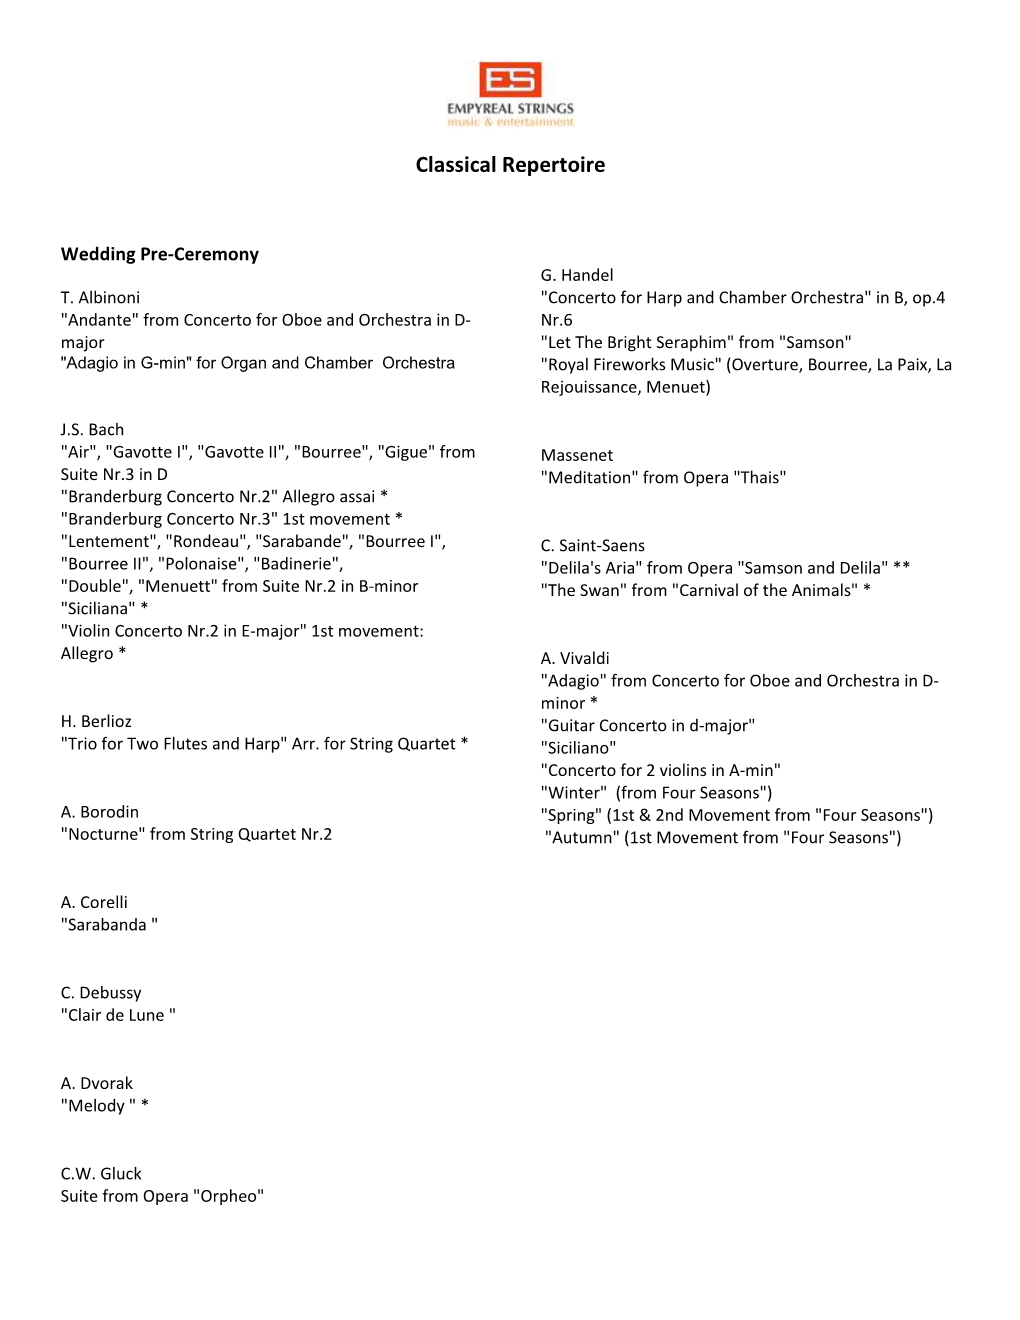 Classical Repertoire (PDF)